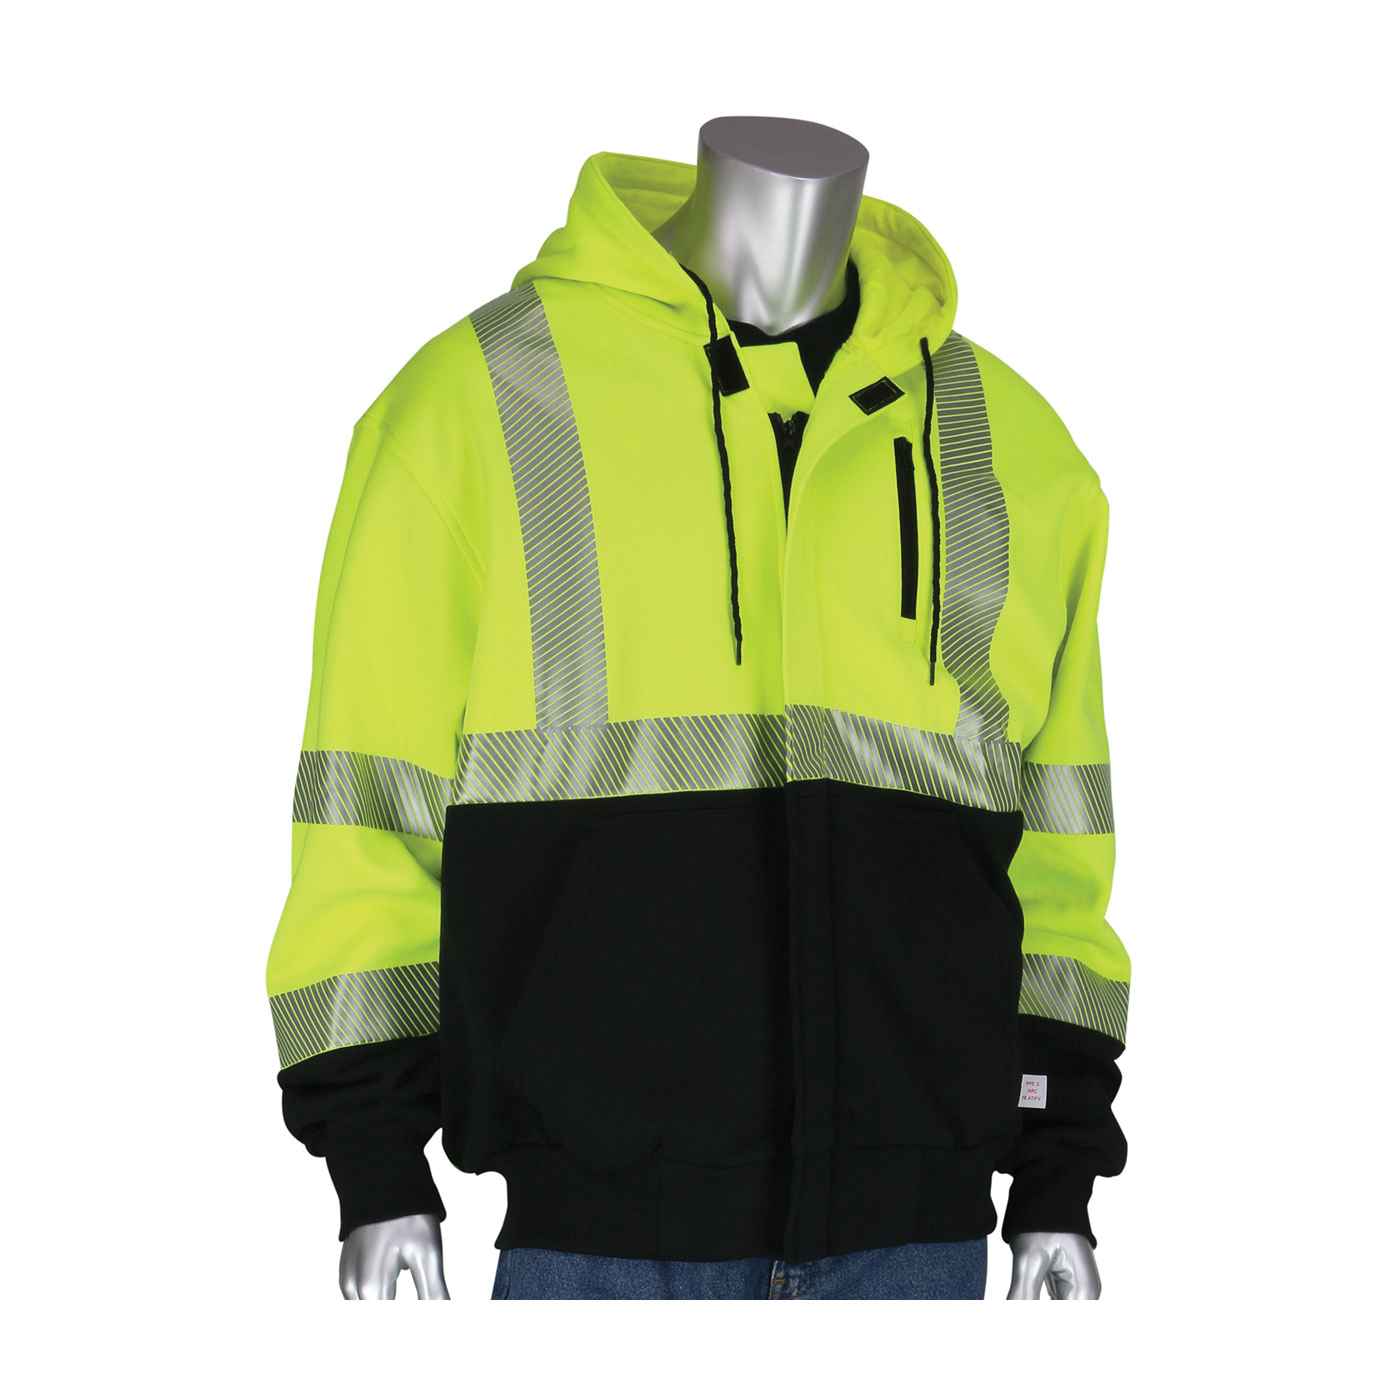 PIP® 385-1370FR-LY/4X 385-1370FR Arc and Flame Resistant Hooded Sweatshirt With Black Bottom, Unisex, 4XL, Hi-Viz Yellow/Black, 60% Modacrylic/40% Cotton, 33 in L